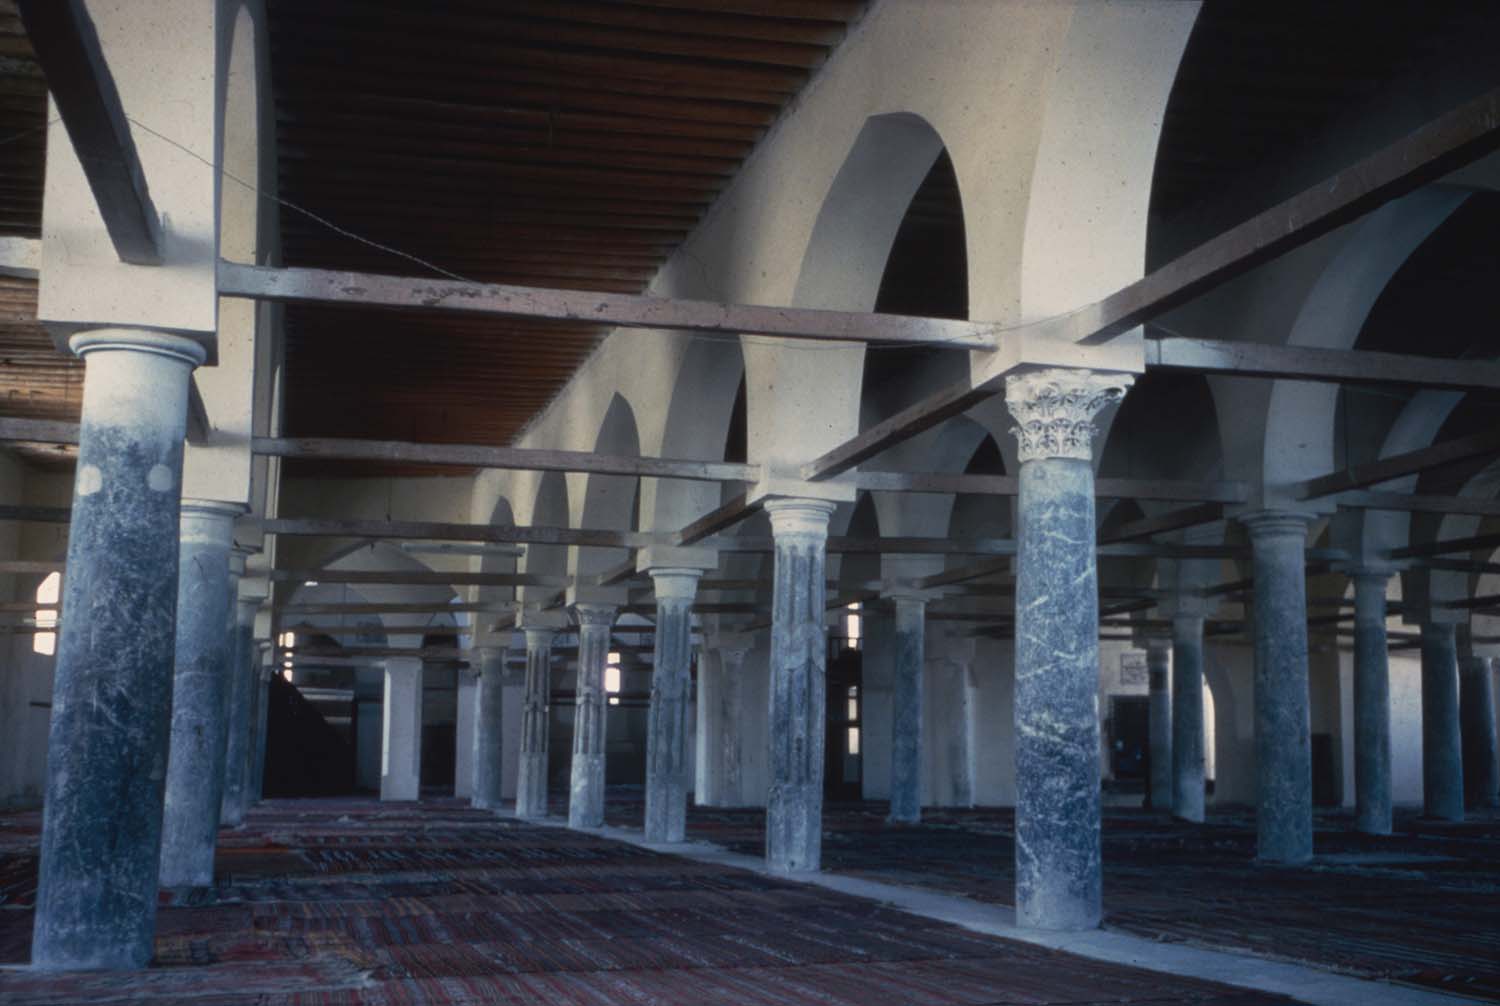 Columns of the interior